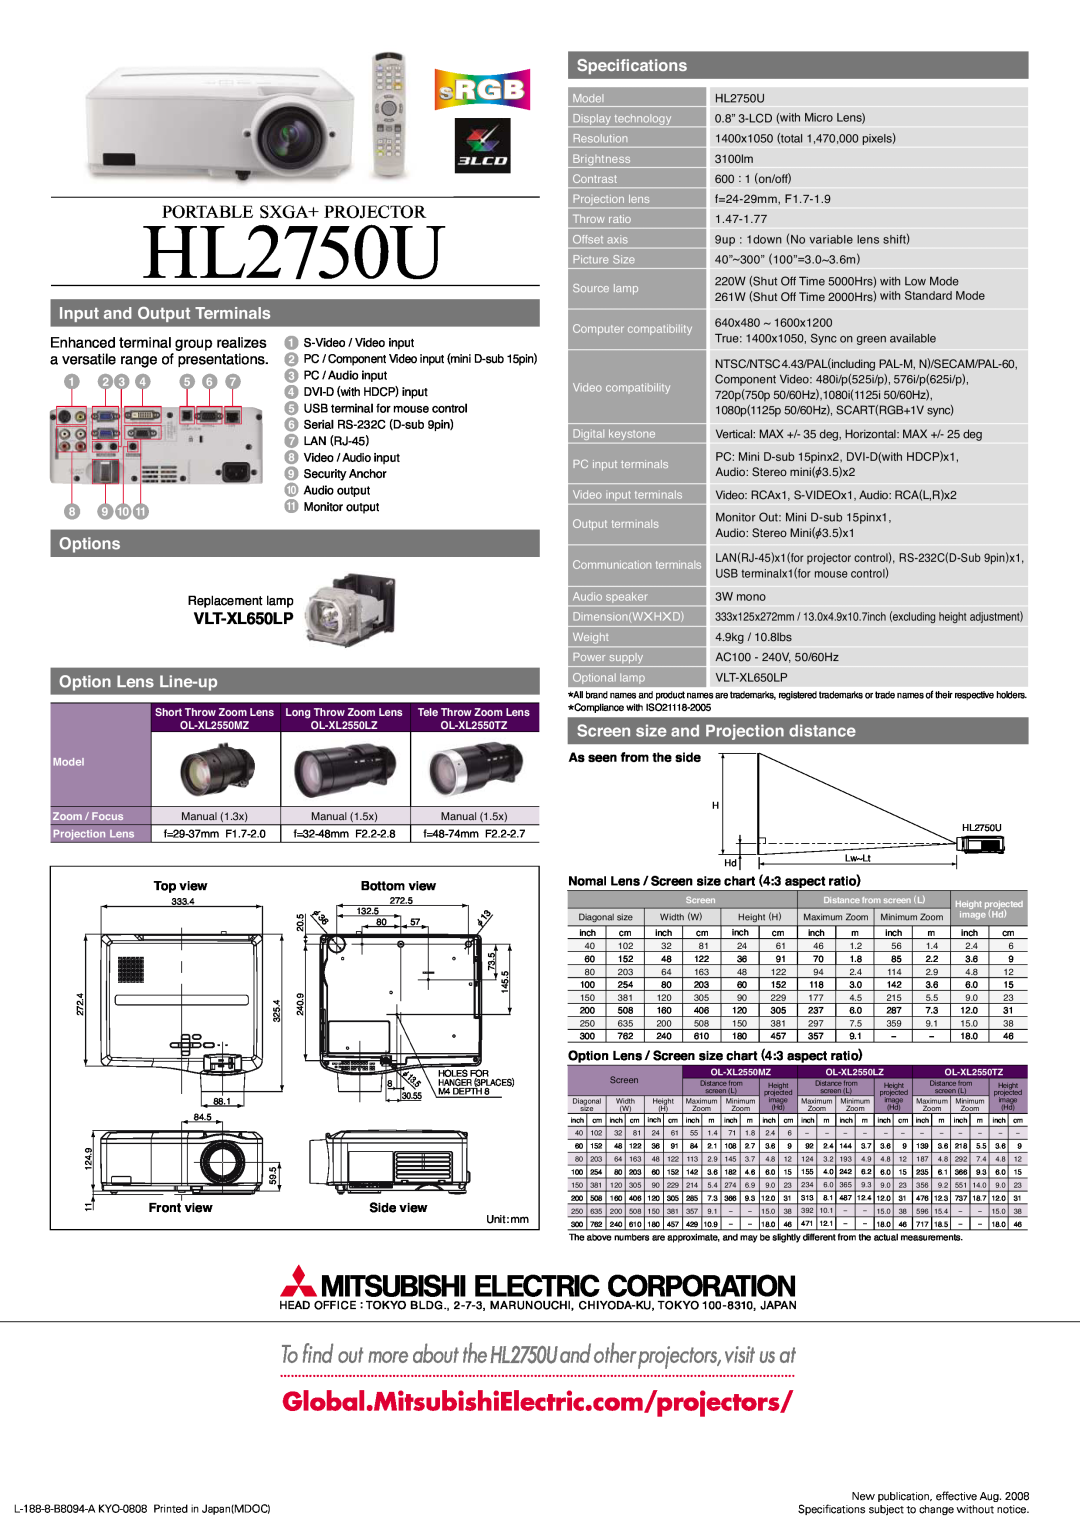 Mitsubishi Electronics HL2750U Portable Sxga+ Projector, Specifications, Input and Output Terminals, Options, VLT-XL650LP 